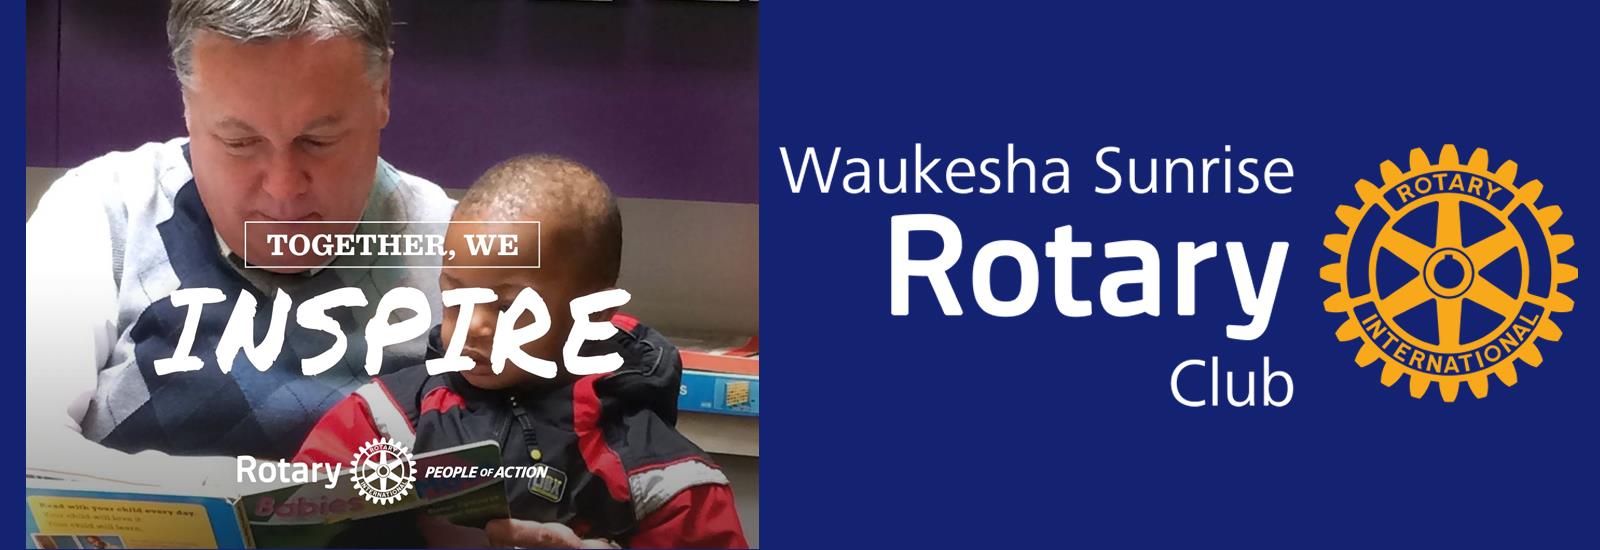 Home Page  Rotary club of Waukesha Sunrise